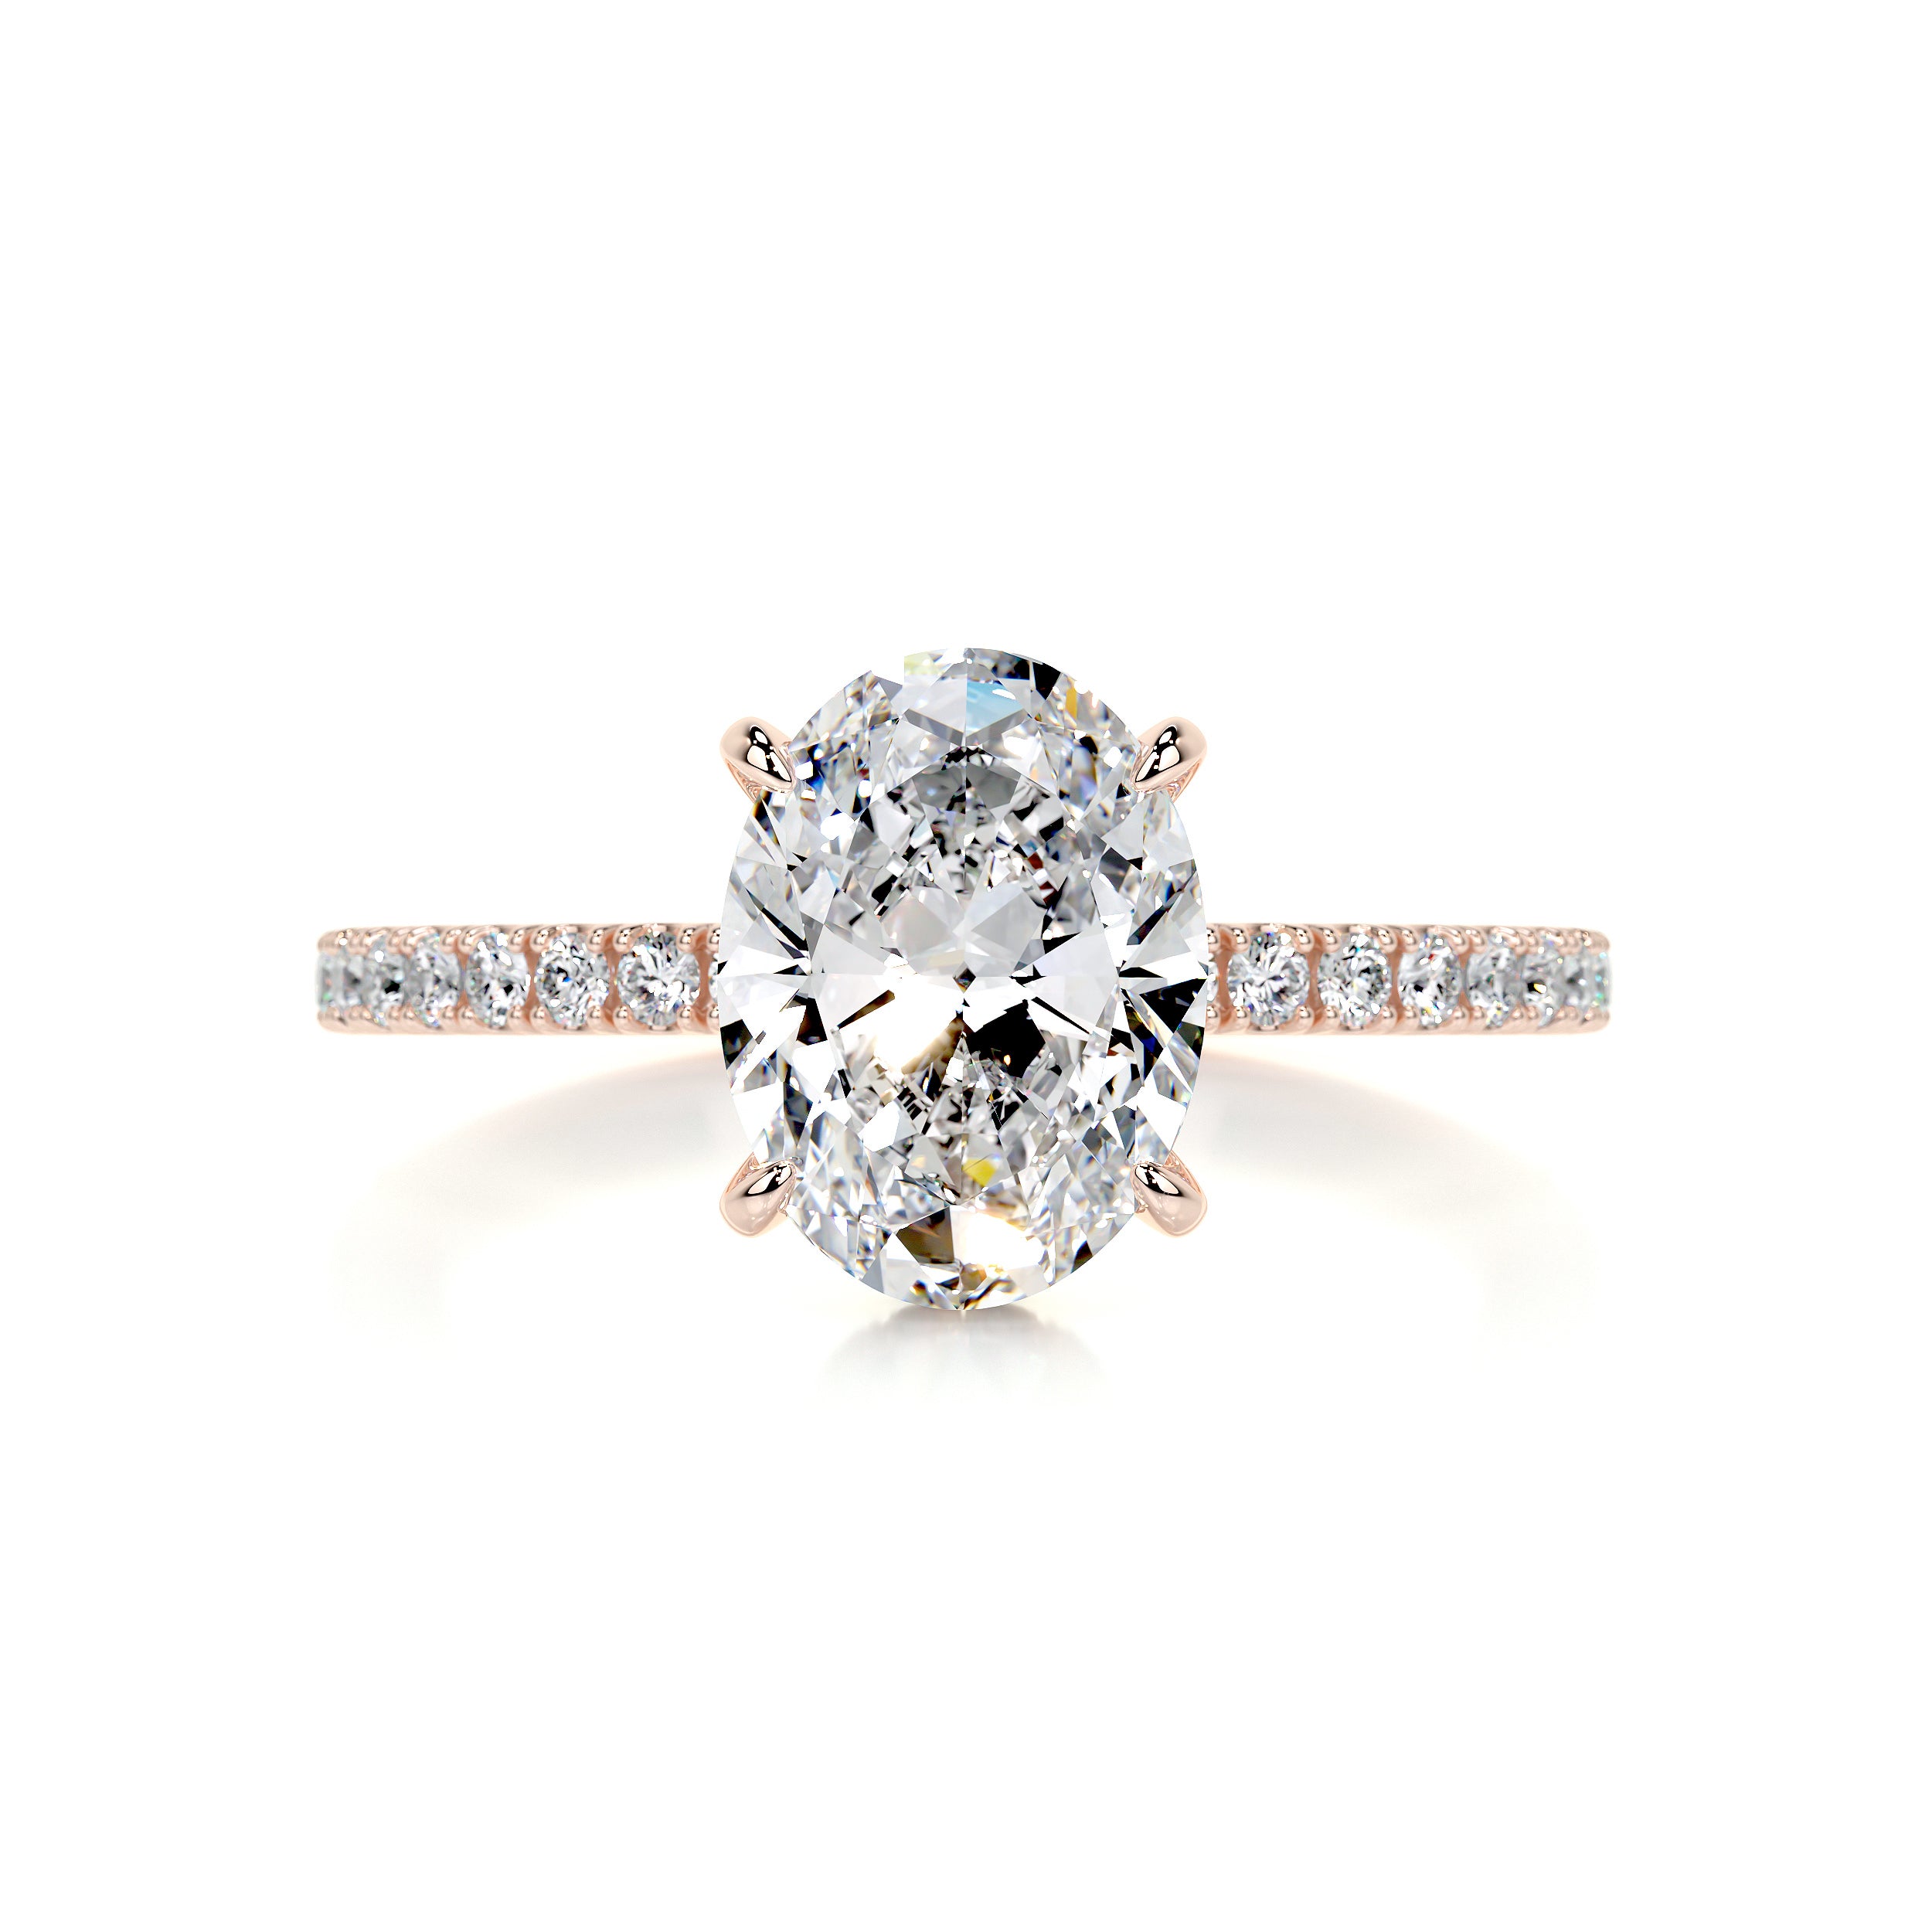 Lucy Diamond Engagement Ring   (2 Carat) -14K Rose Gold